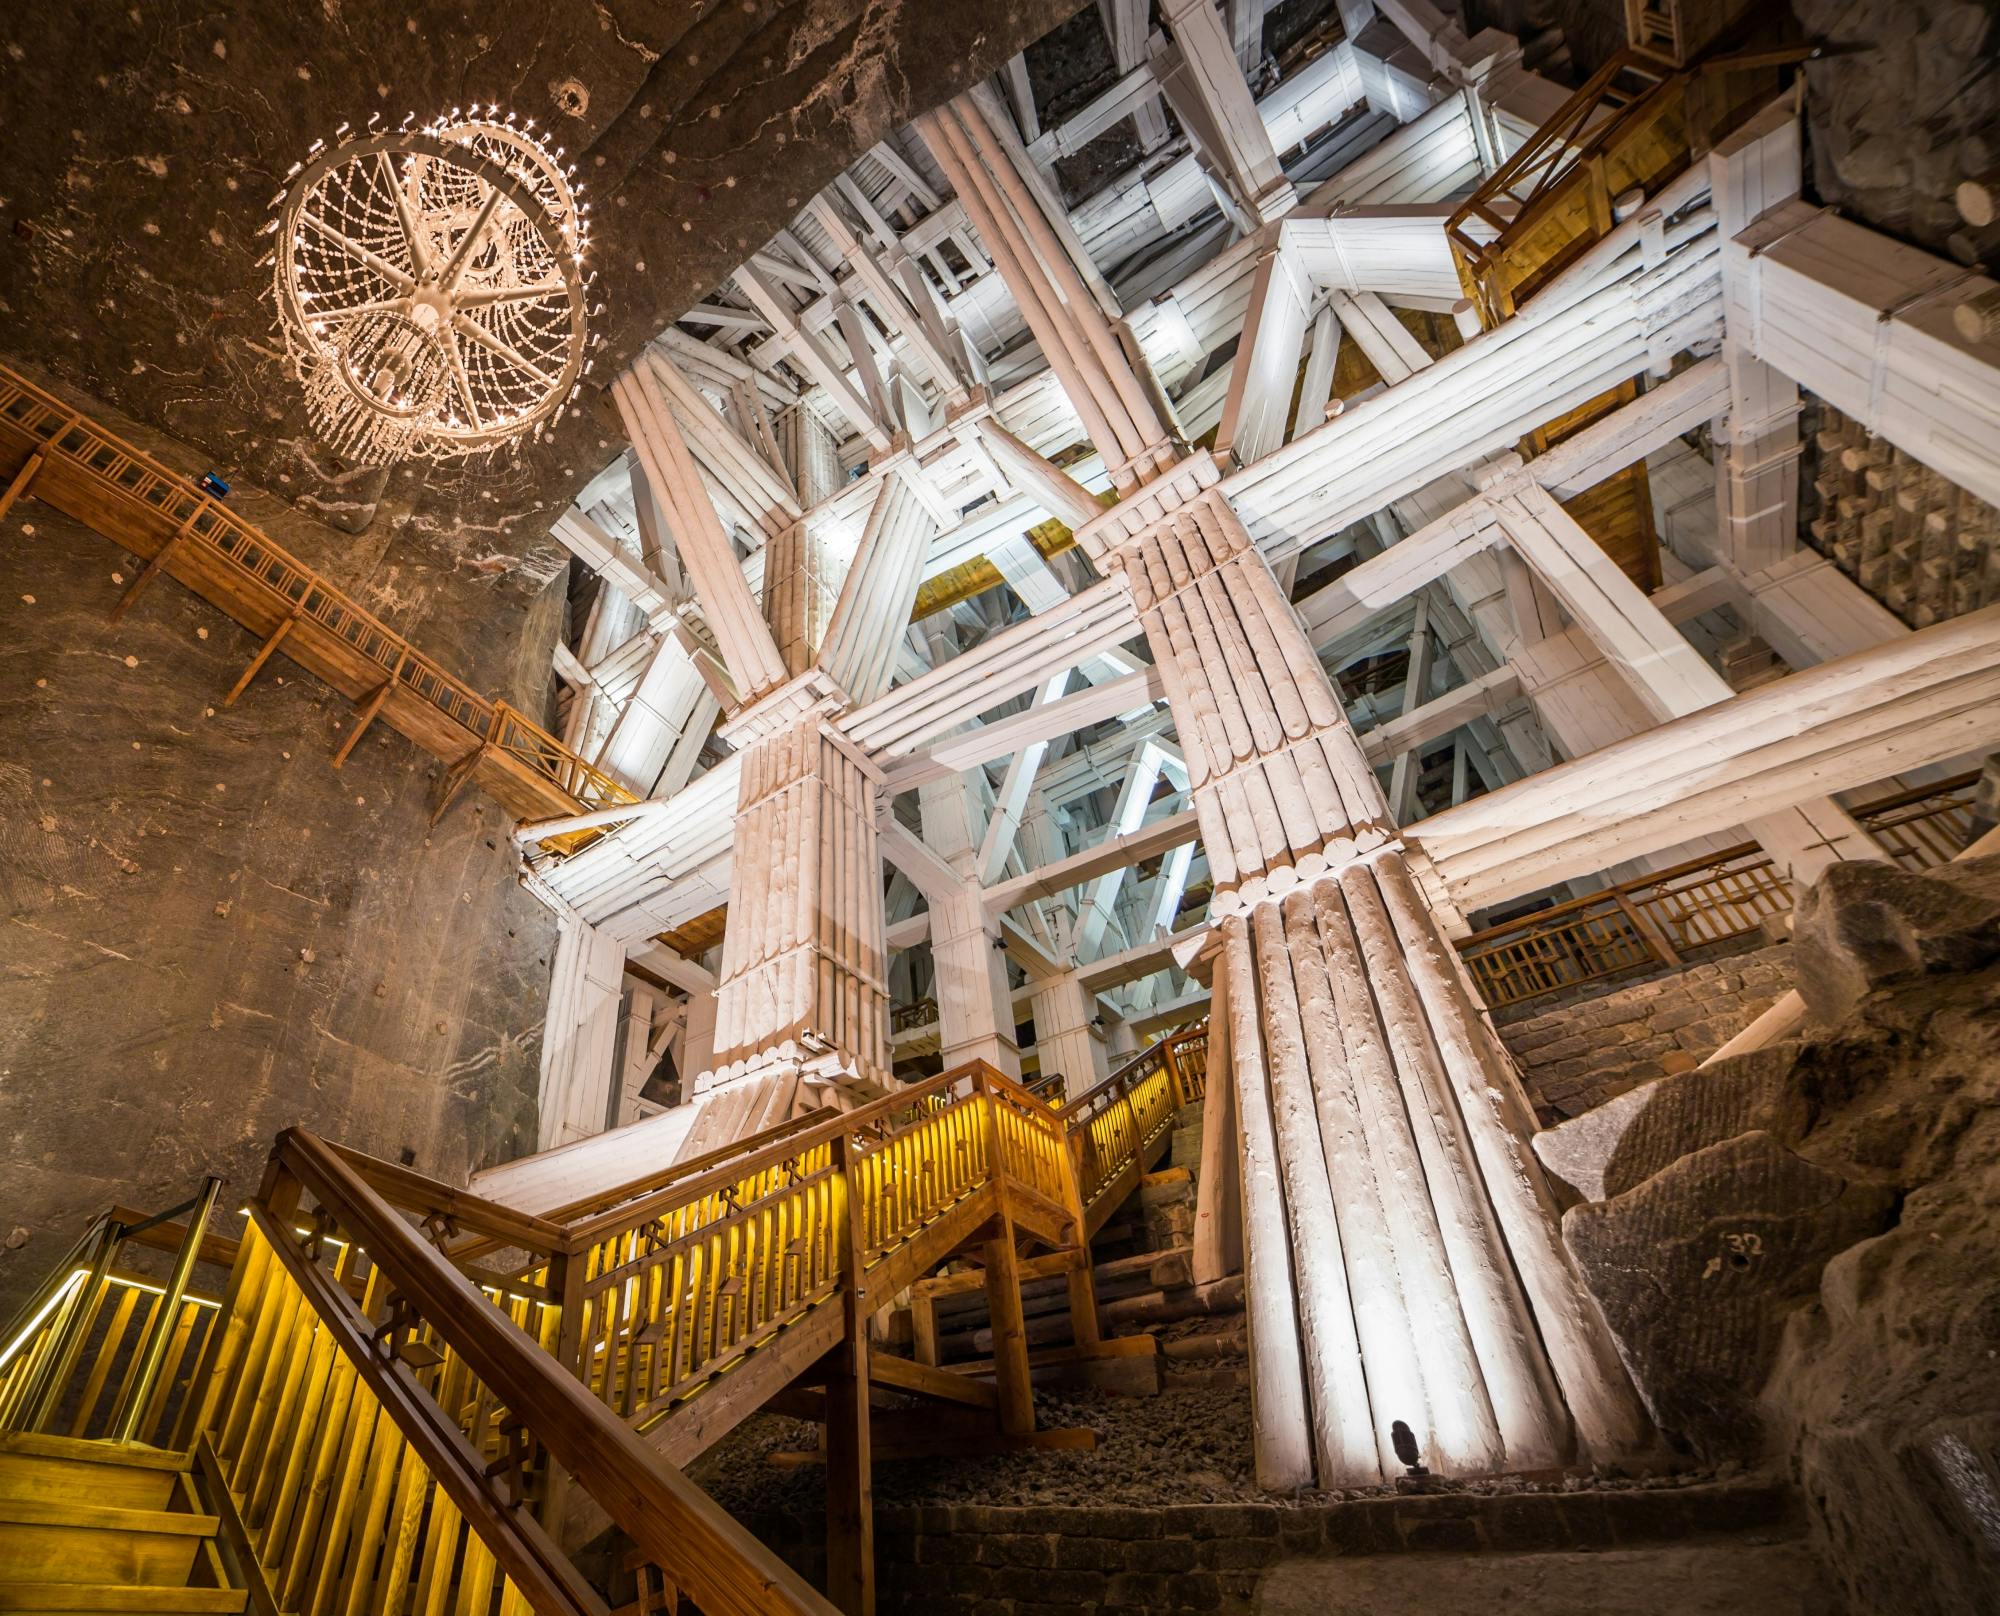 Wieliczka Salt Mine guided tour plus fast-track entrance